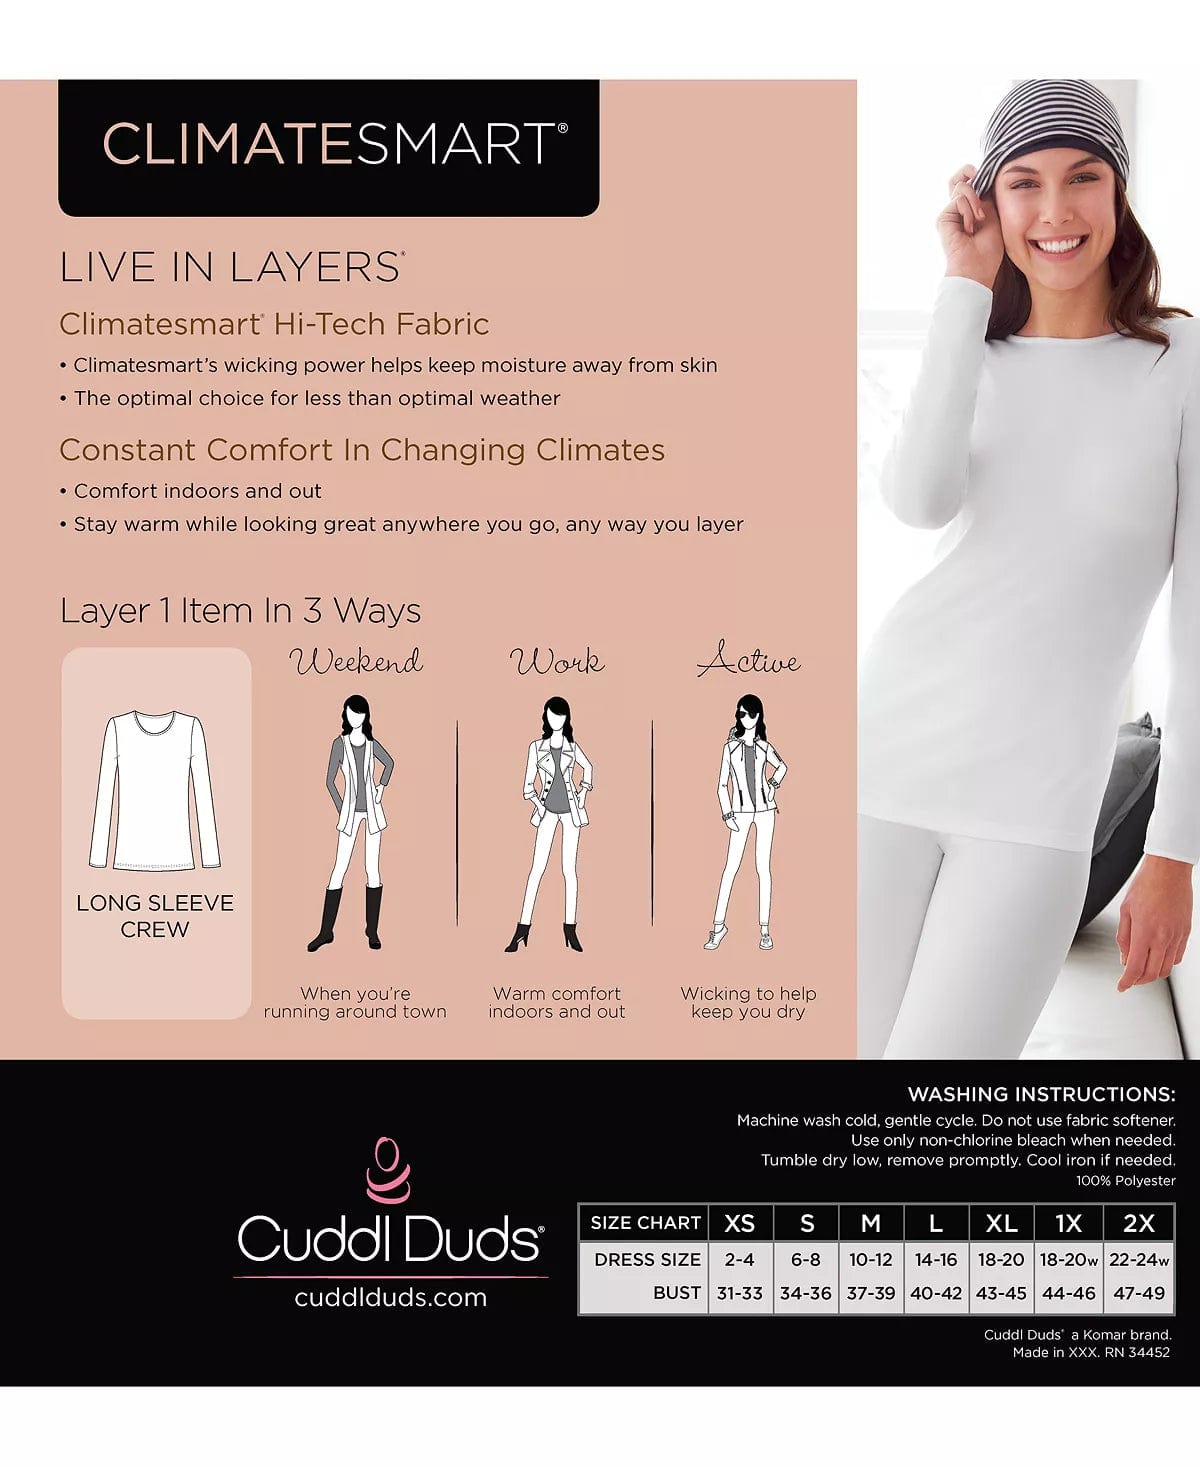 Cuddl Duds Women's Softwear Lace Edge Legging - Plus Size, White